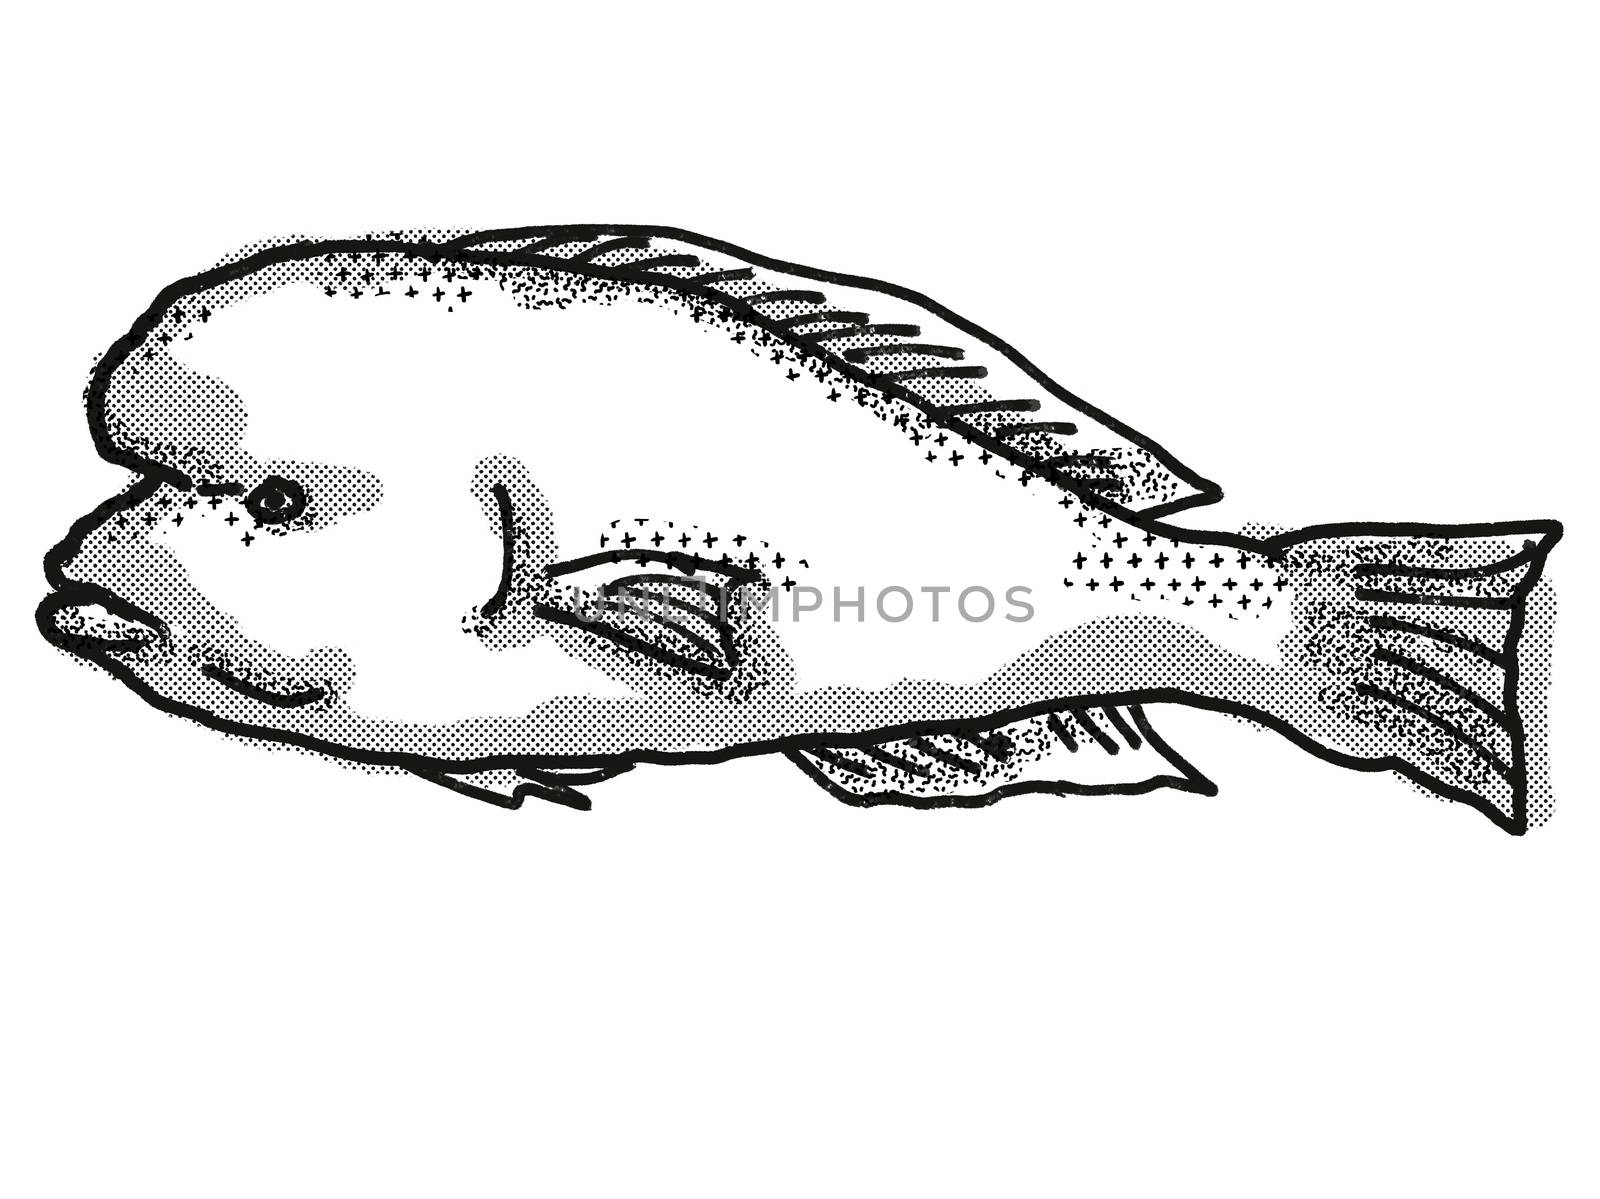 Doubleheader Australian Fish Cartoon Retro Drawing by patrimonio